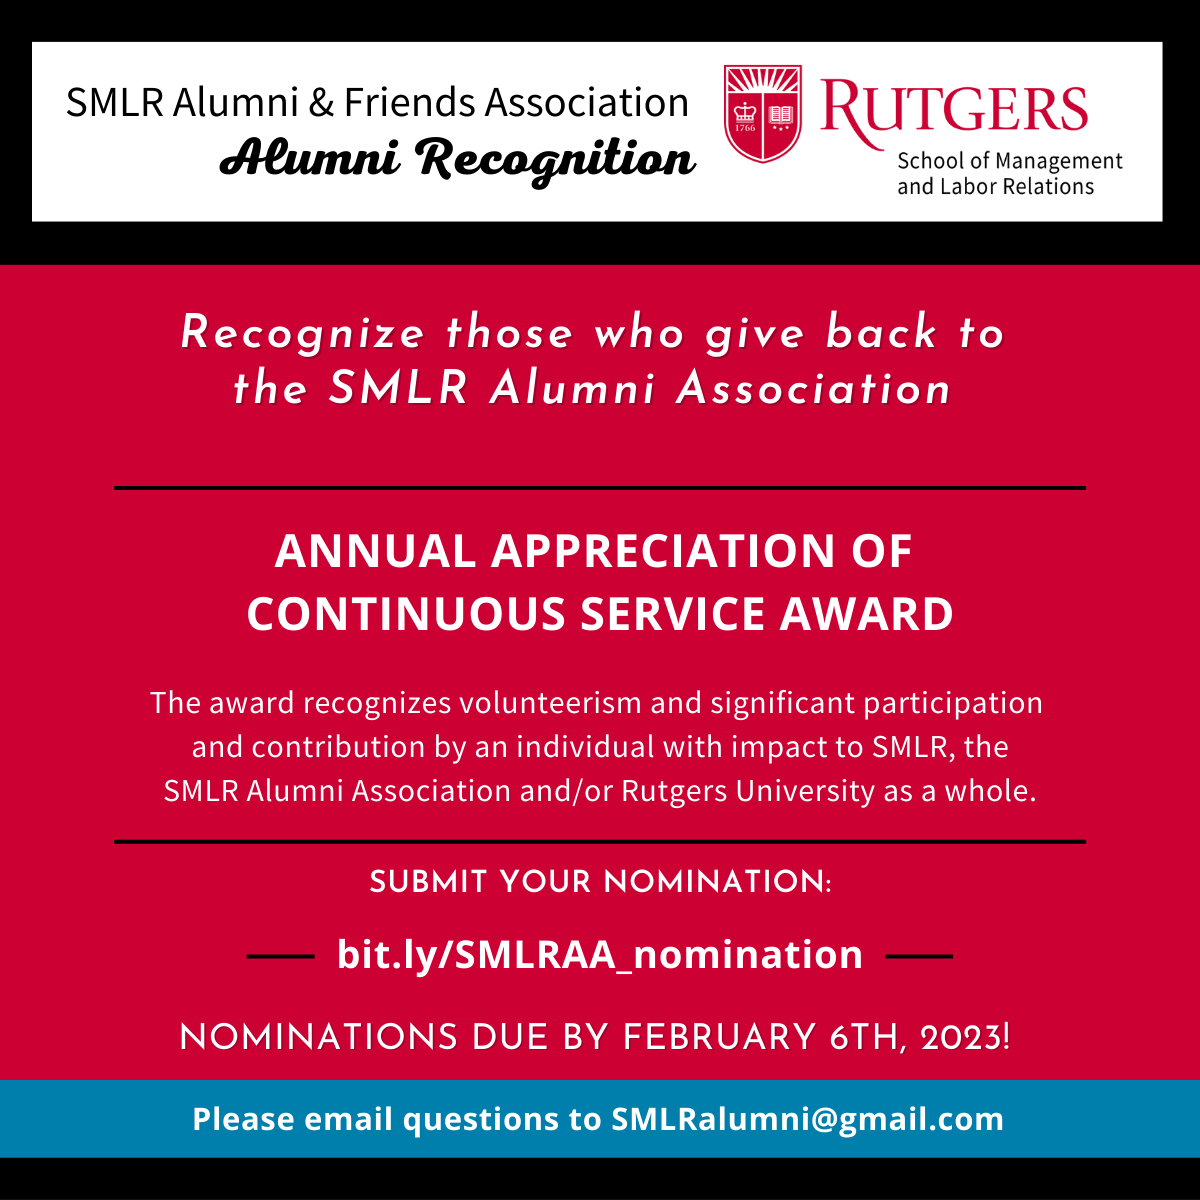 Image of Alumni Recognition Award